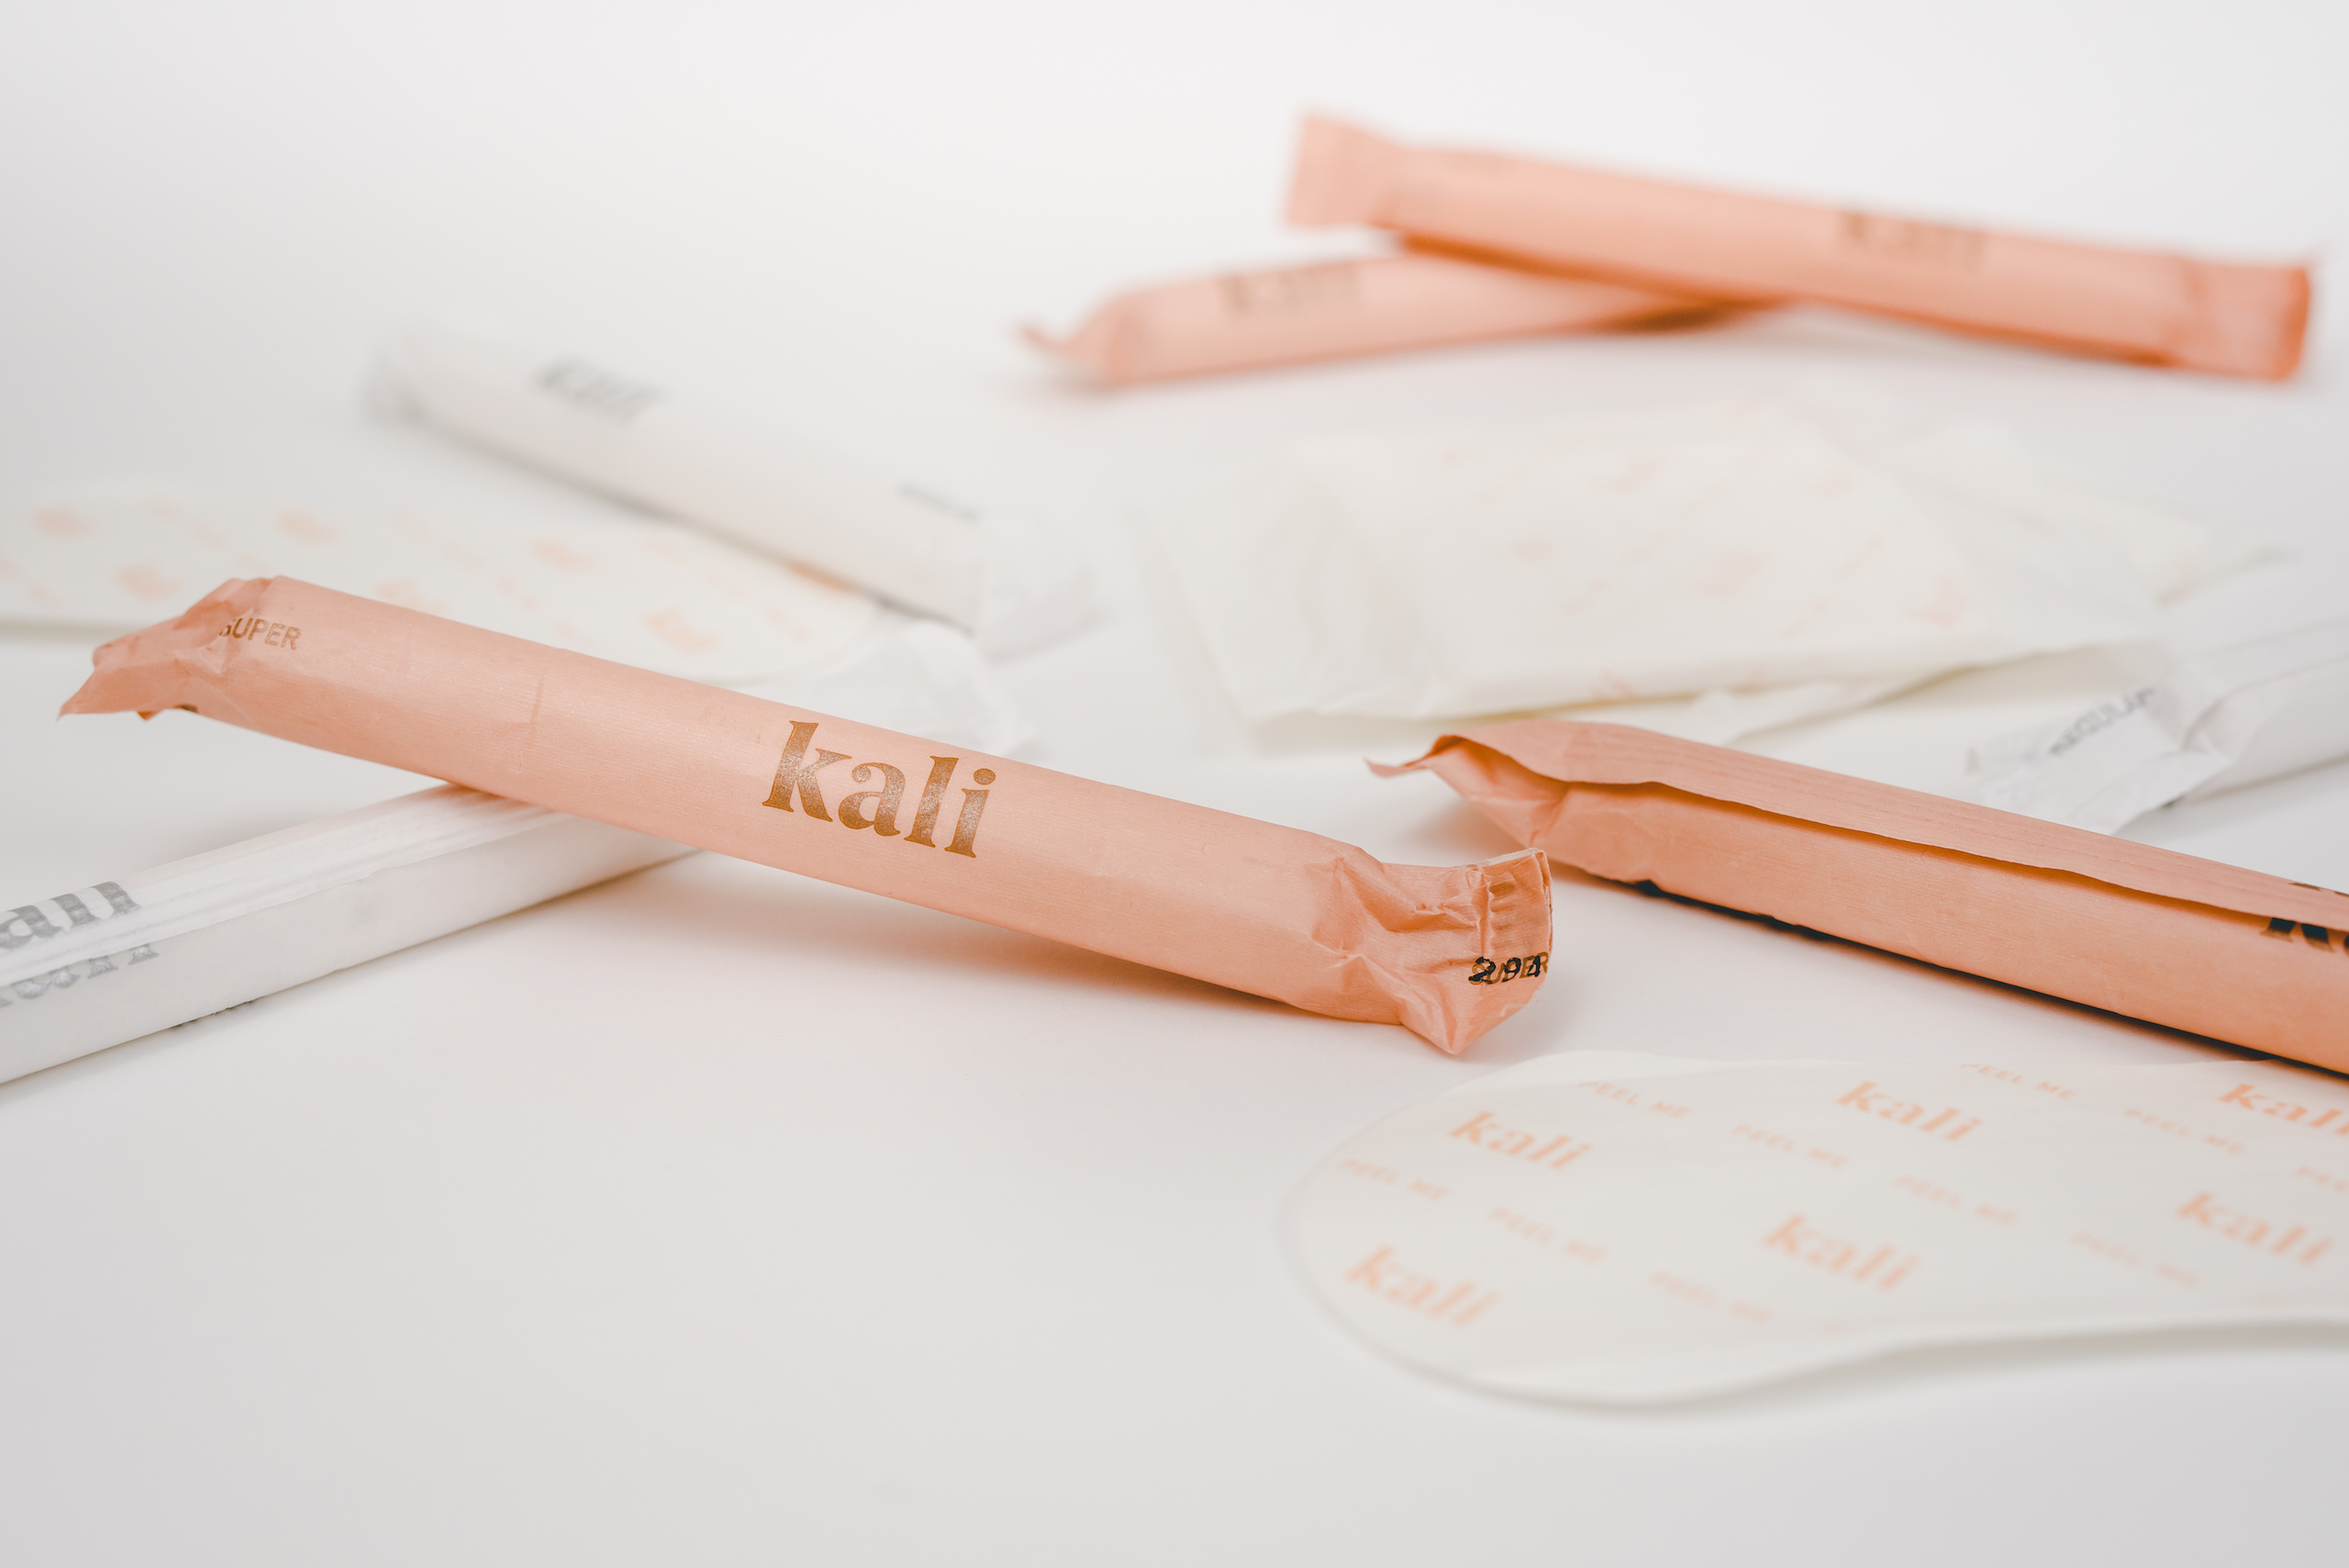 IU CI Studios Kali Boxes Branding and Marketing Closeup of tampons